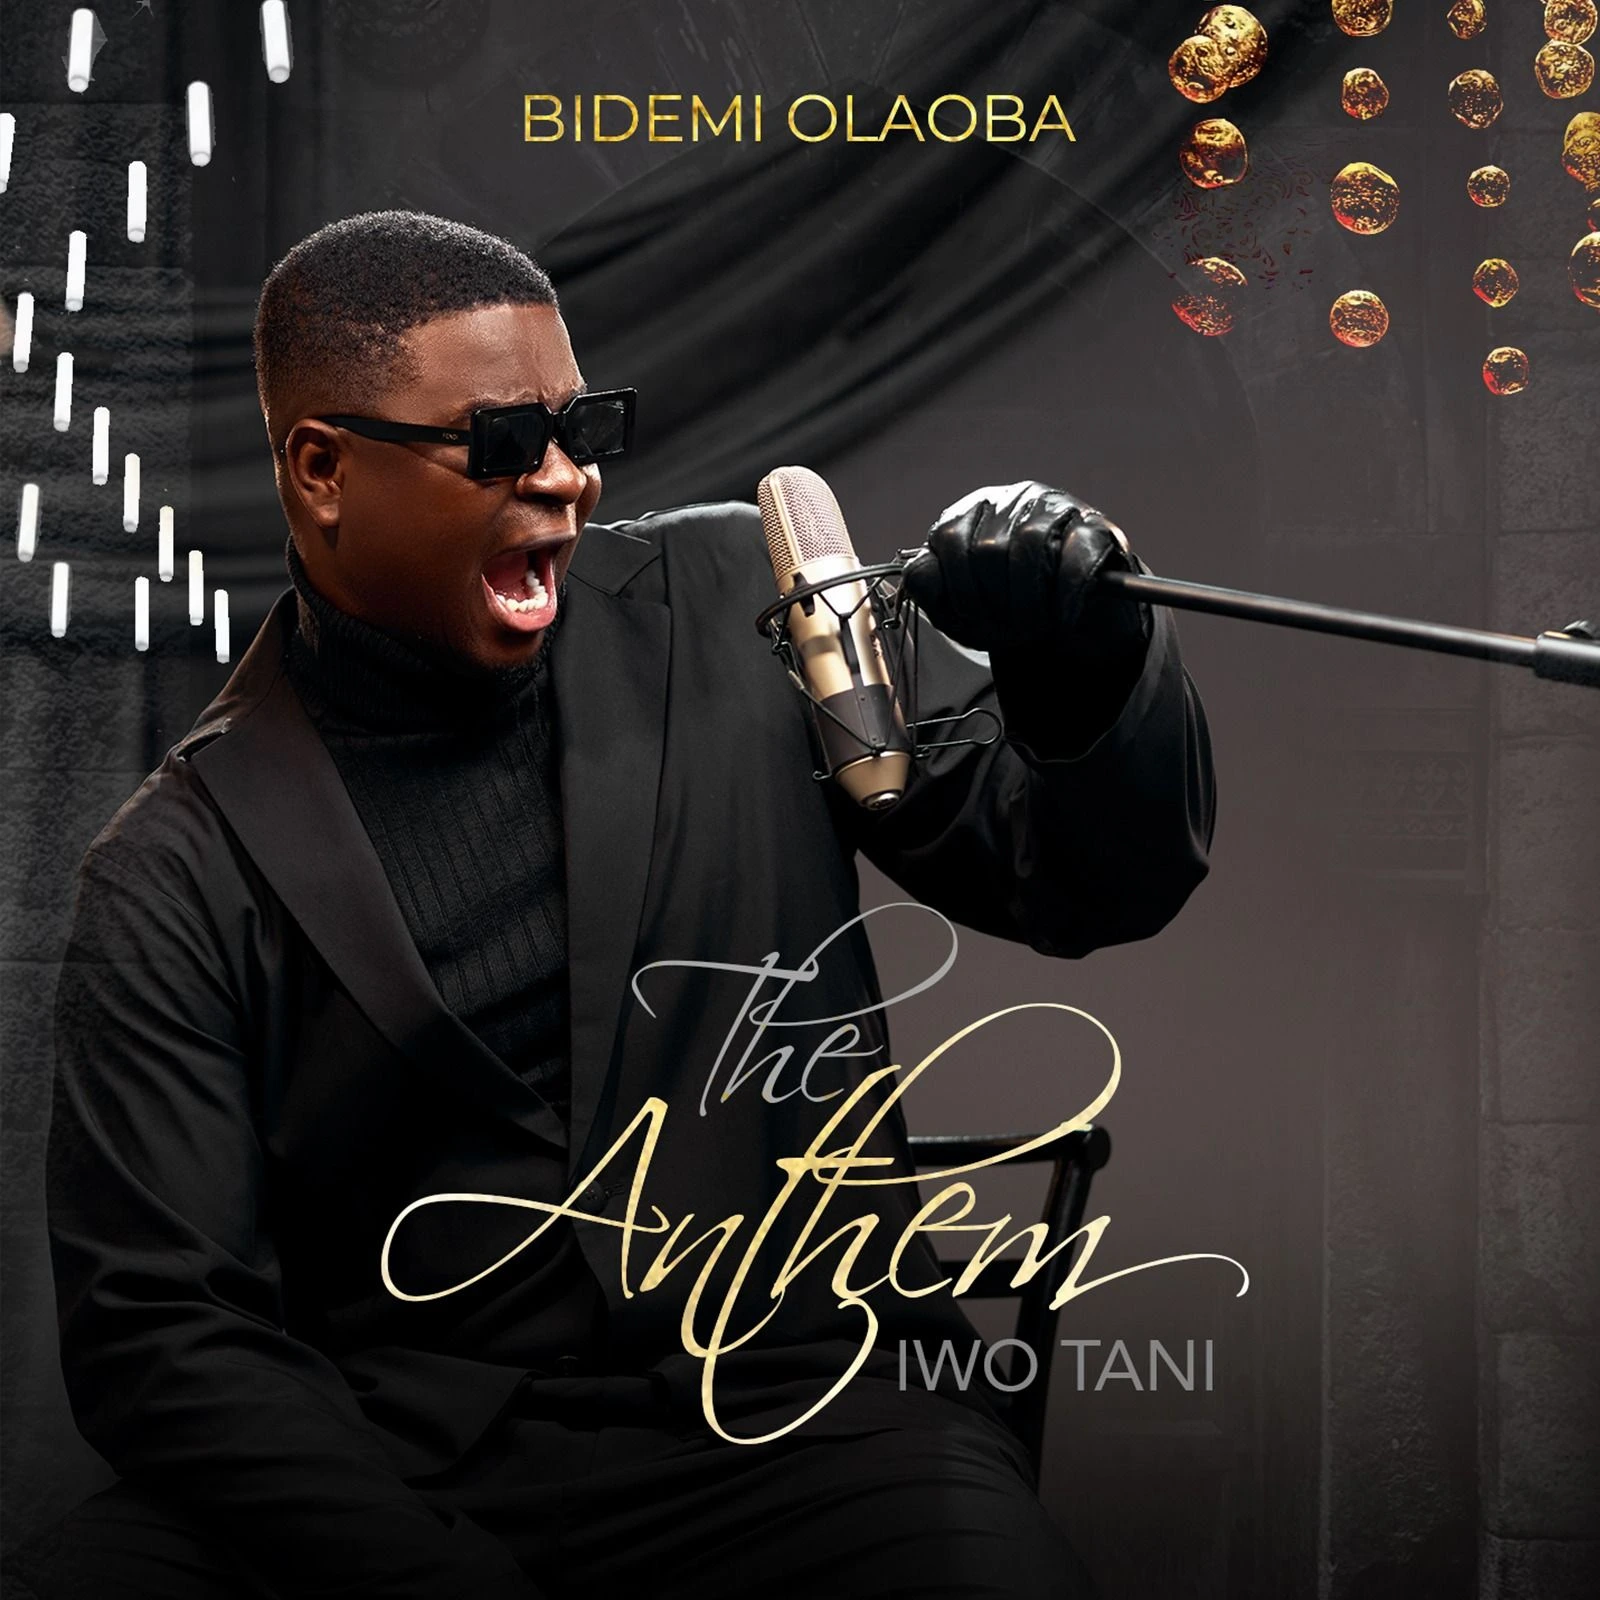 Bidemi Olaoba – The Anthem (Iwo Tani)